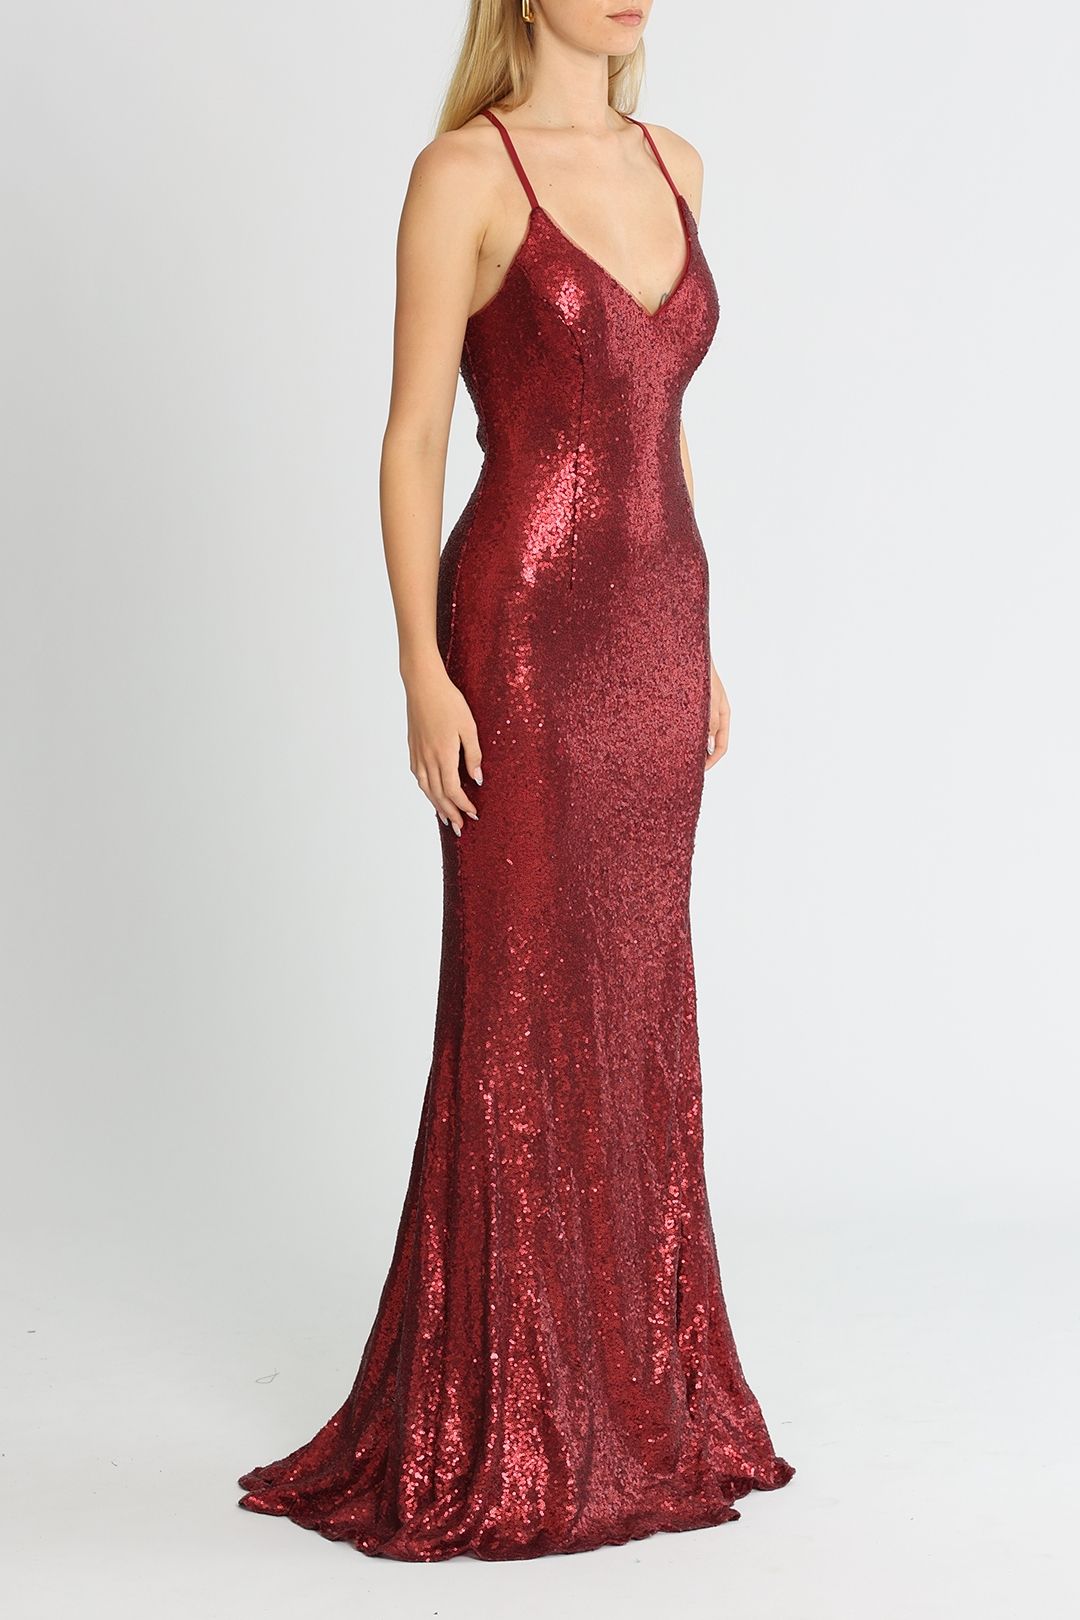 Buy Luscious Red Dresses | Dresses | indian Dresses